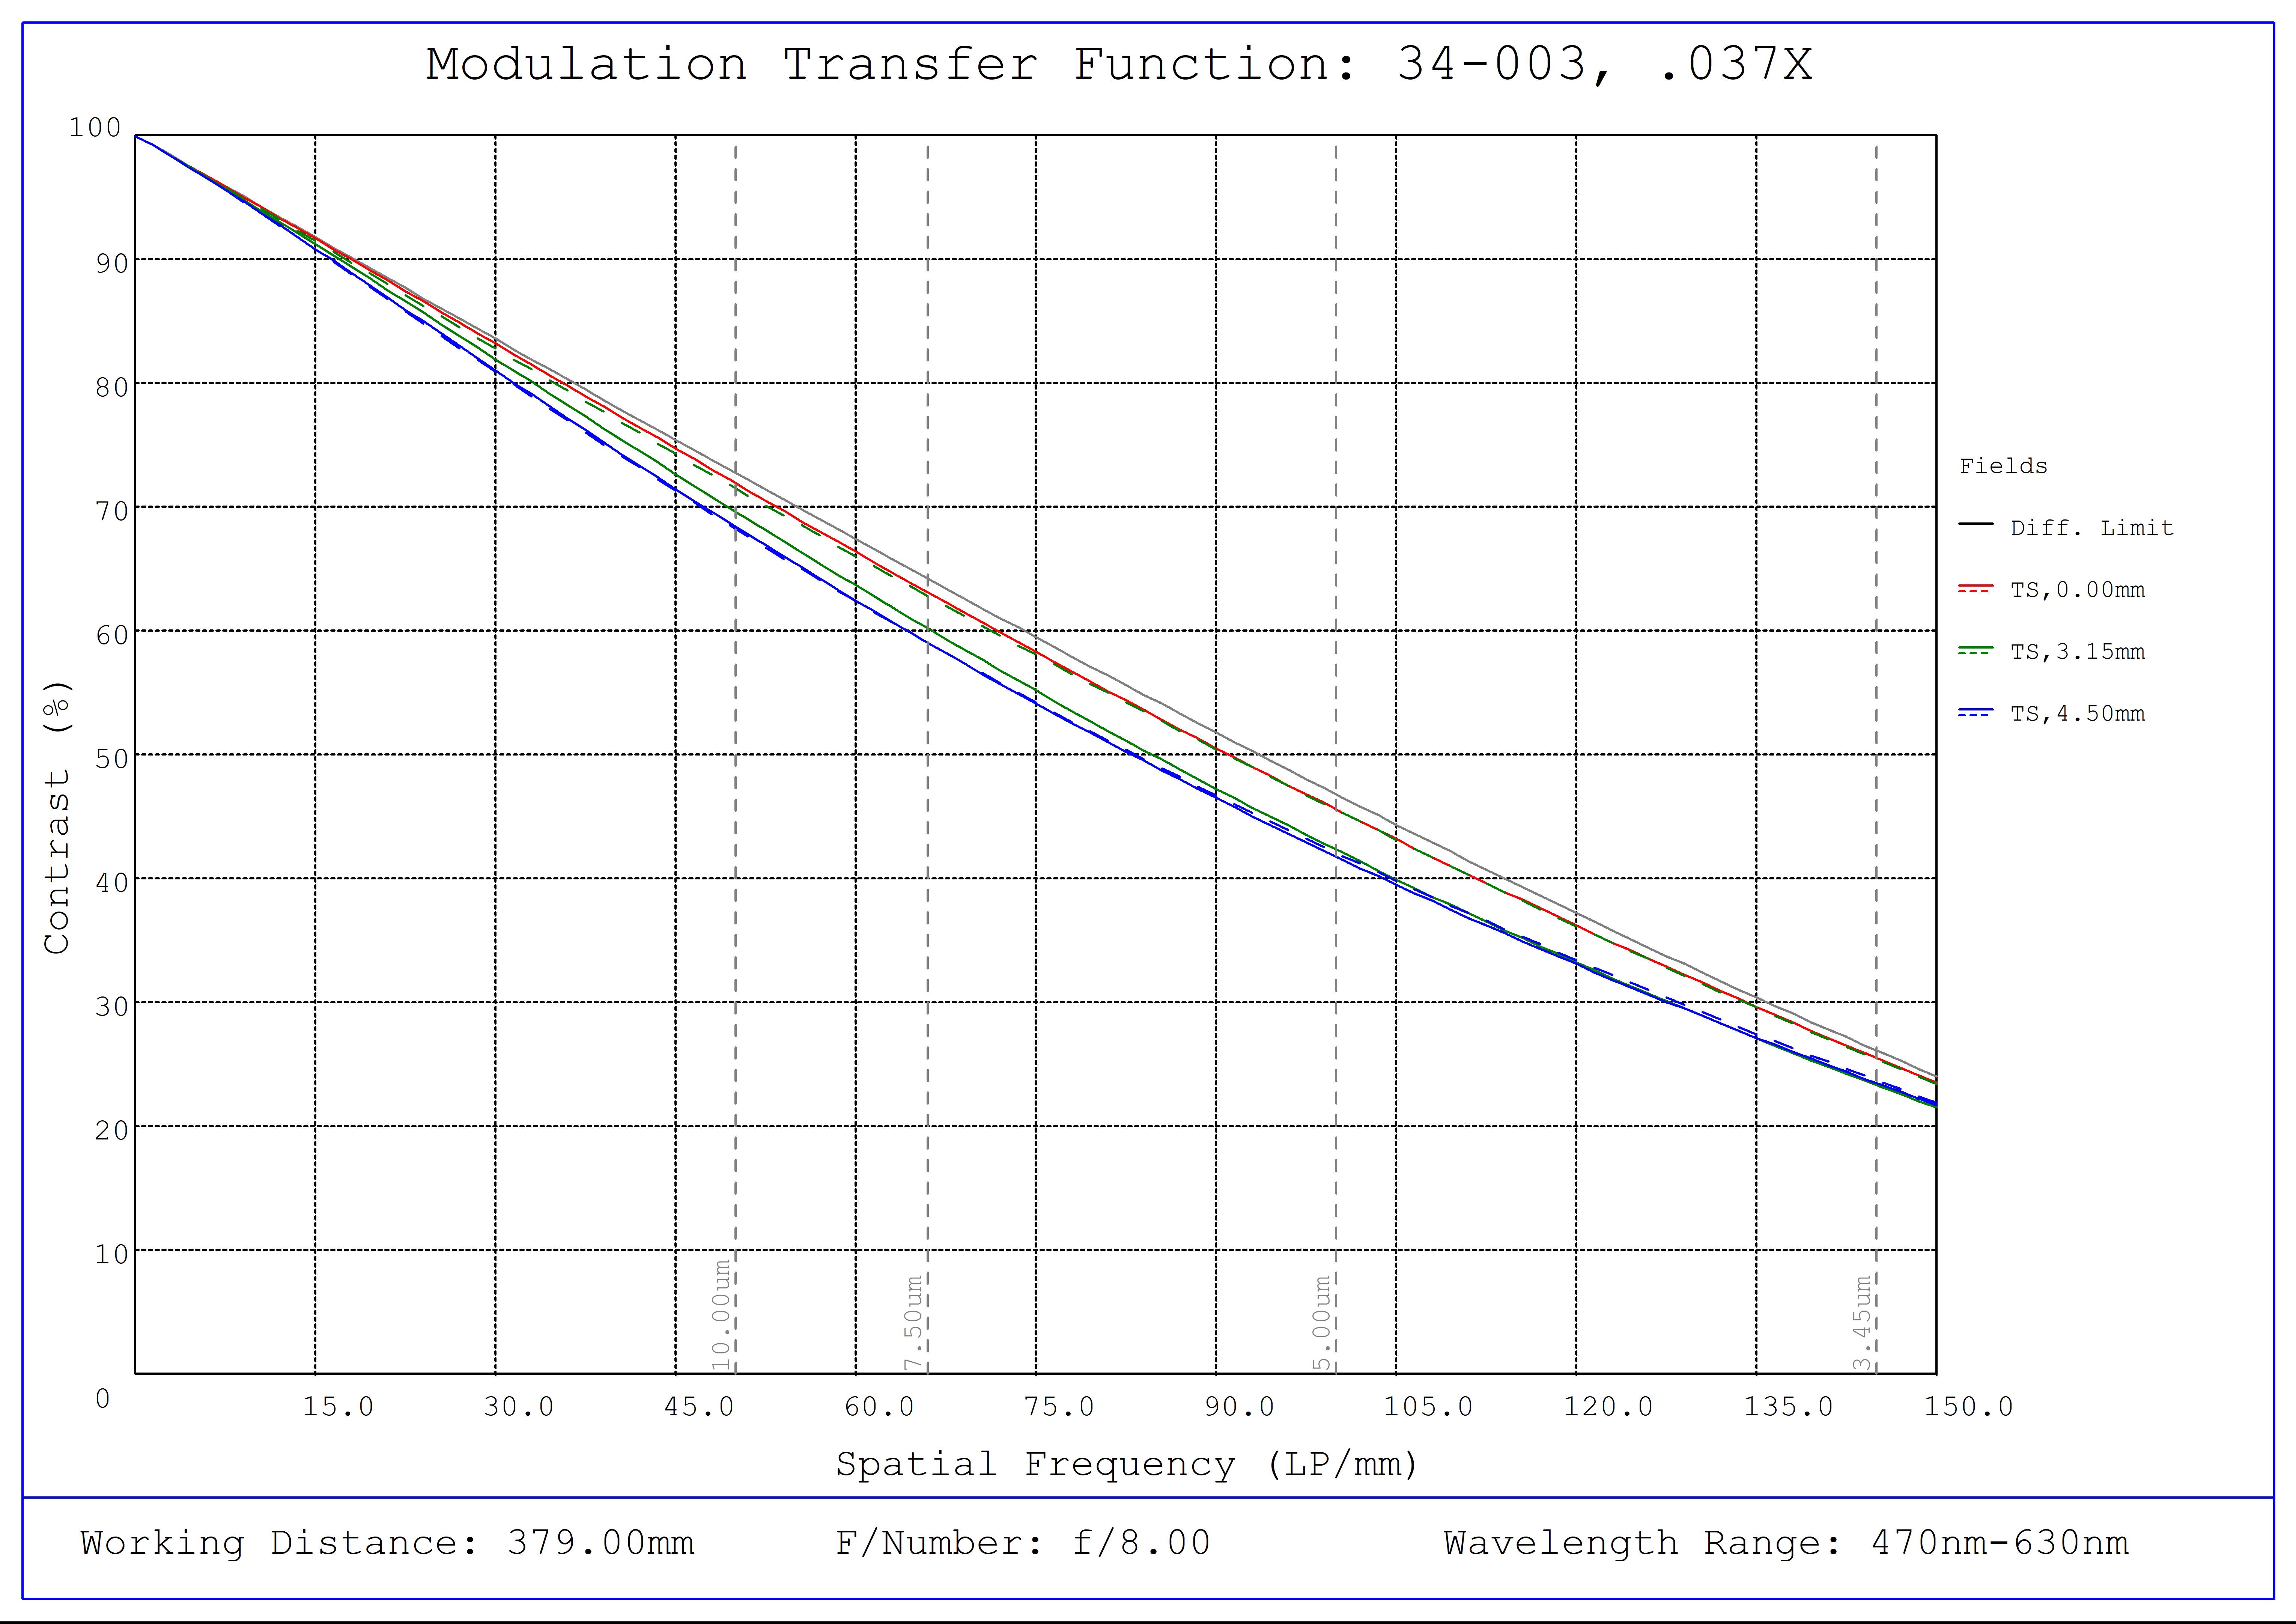 #34-003, 0.037X, 1/1.8" C-Mount TitanTL® Telecentric Lens, Modulated Transfer Function (MTF) Plot, 379mm Working Distance, f8